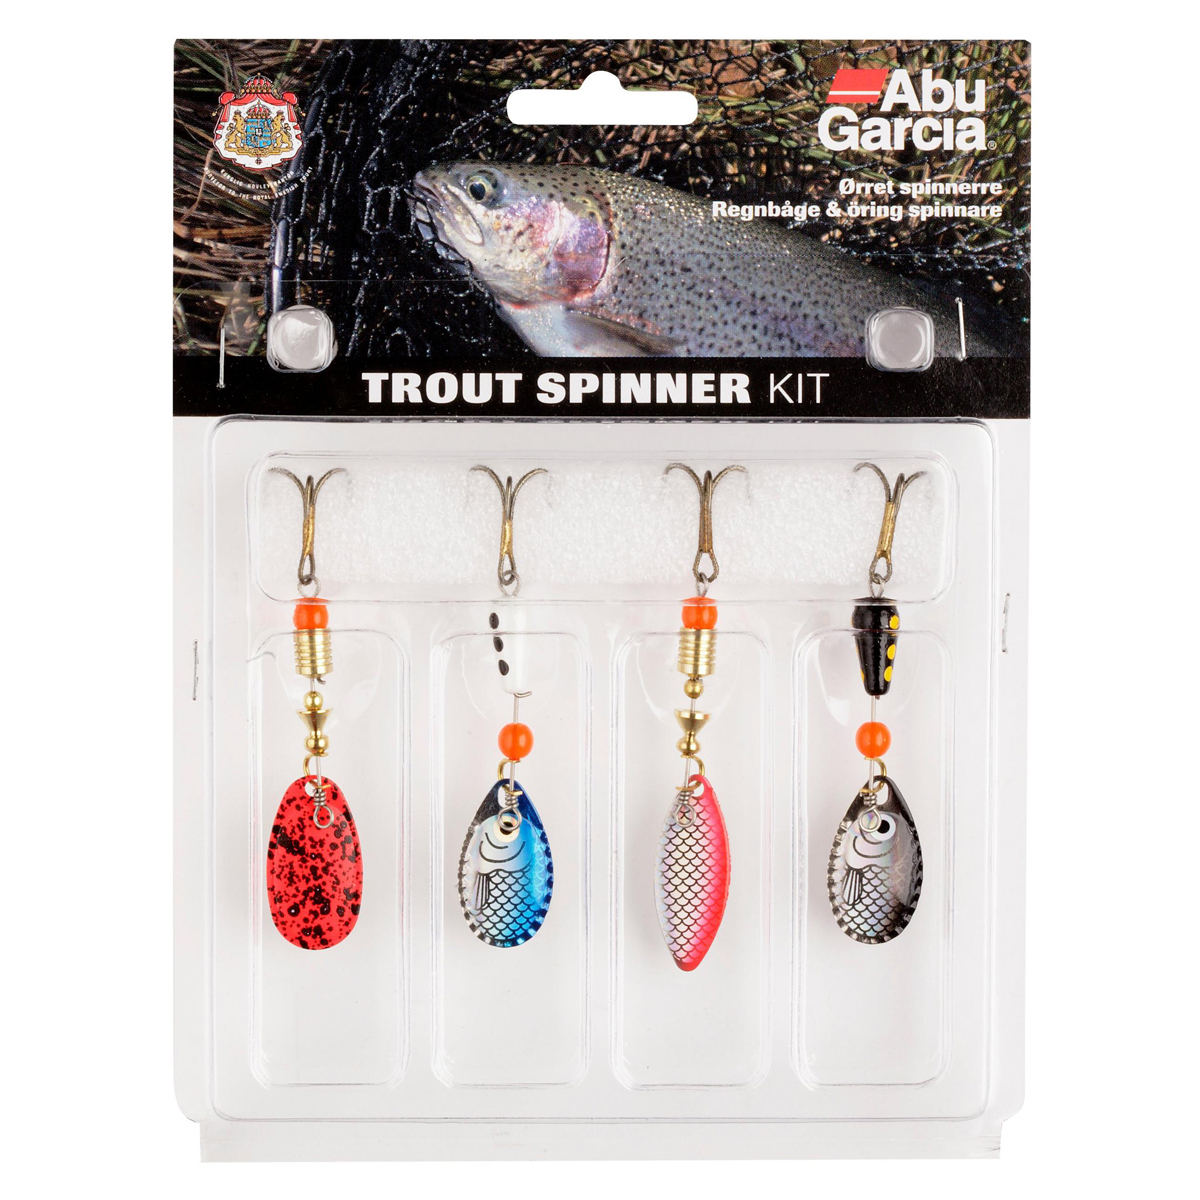 Abu Garcia Trout Spinner Kit (4 stuks)